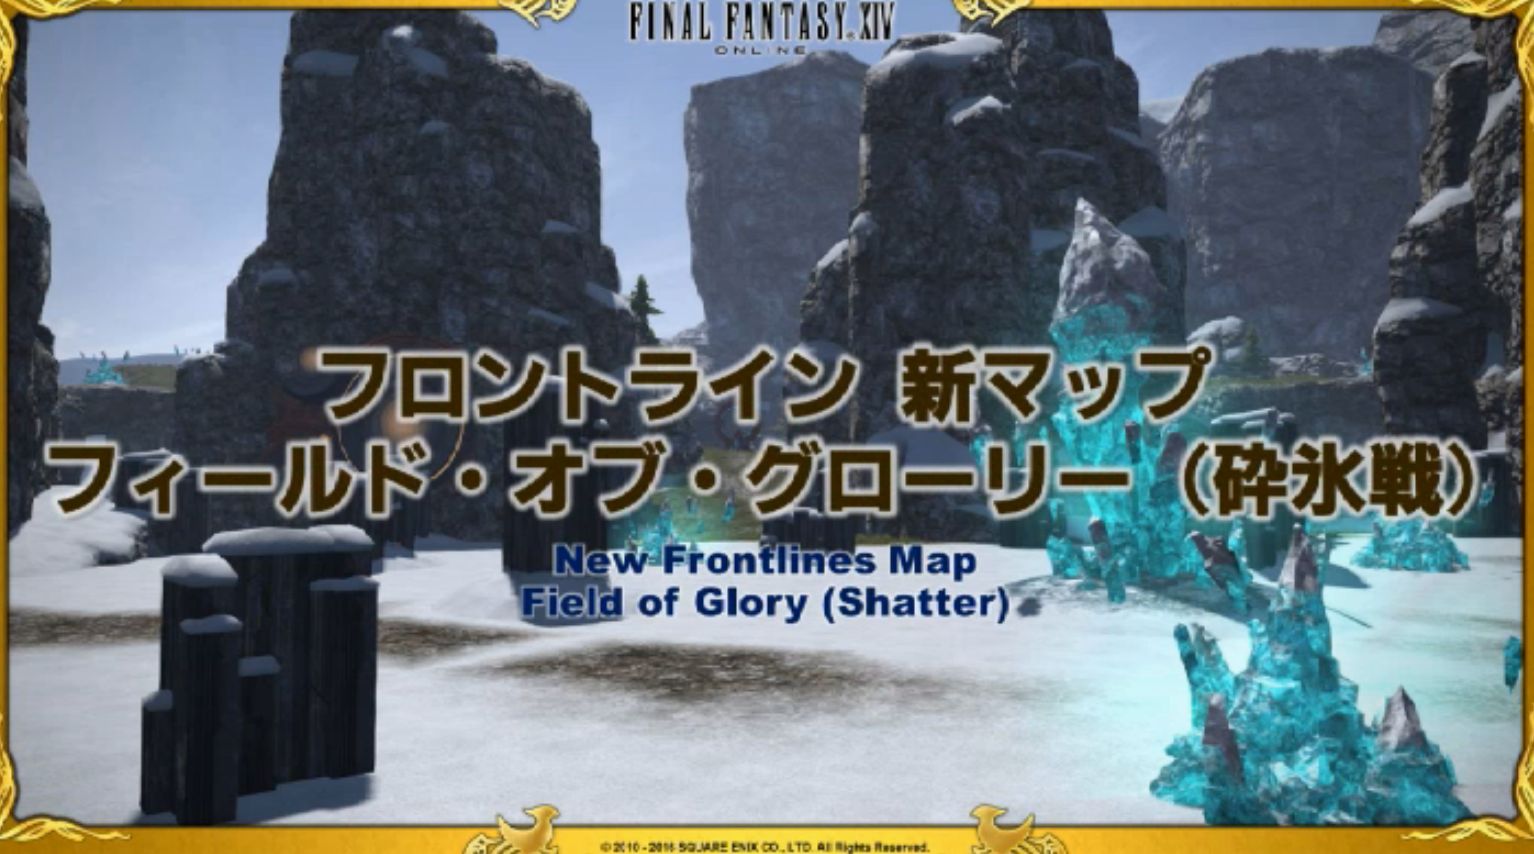 Final Fantasy XIV Frontlines Shatter